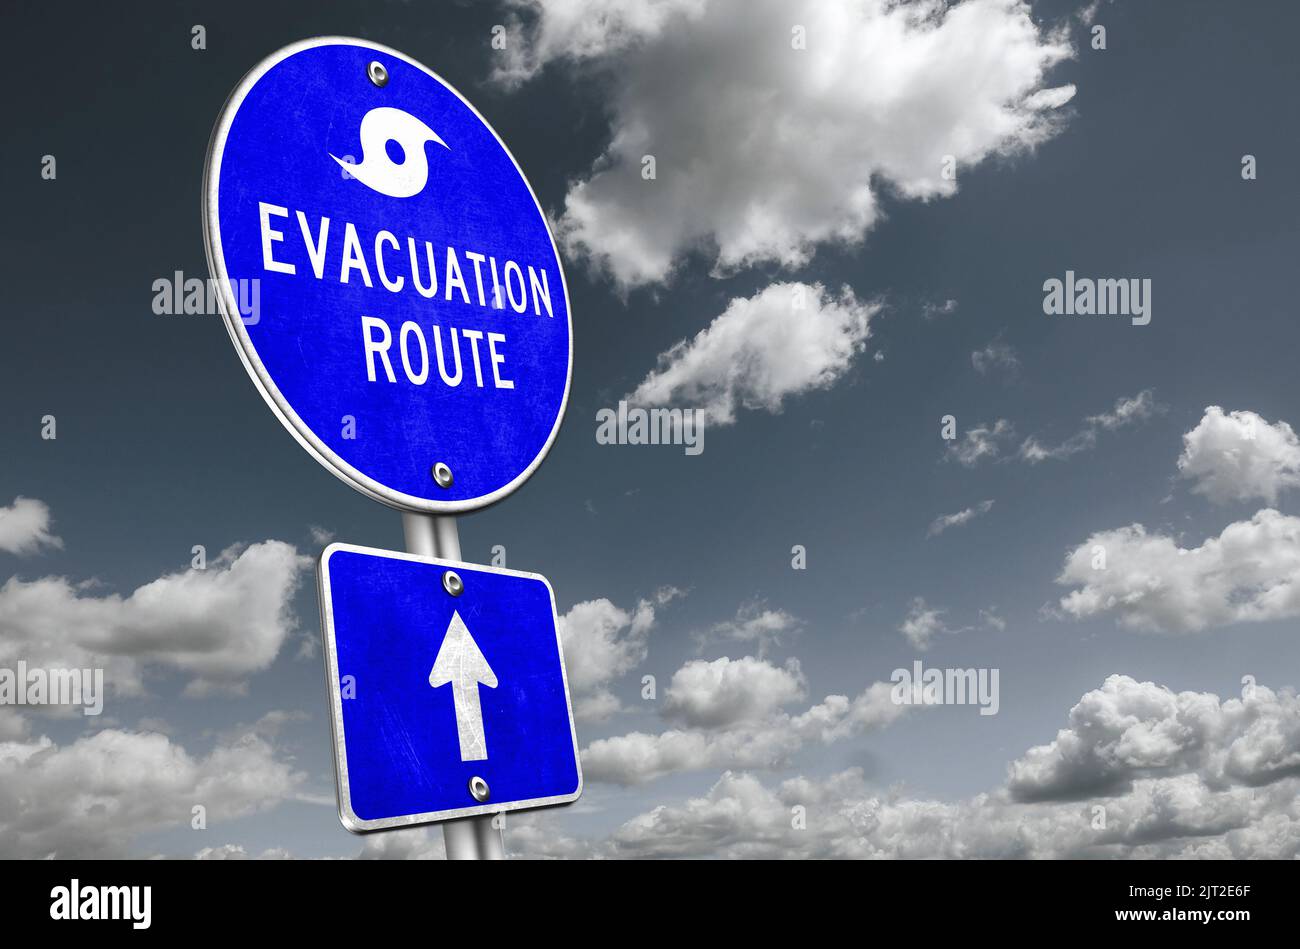 Evacuation route during hurricane Stock Photo